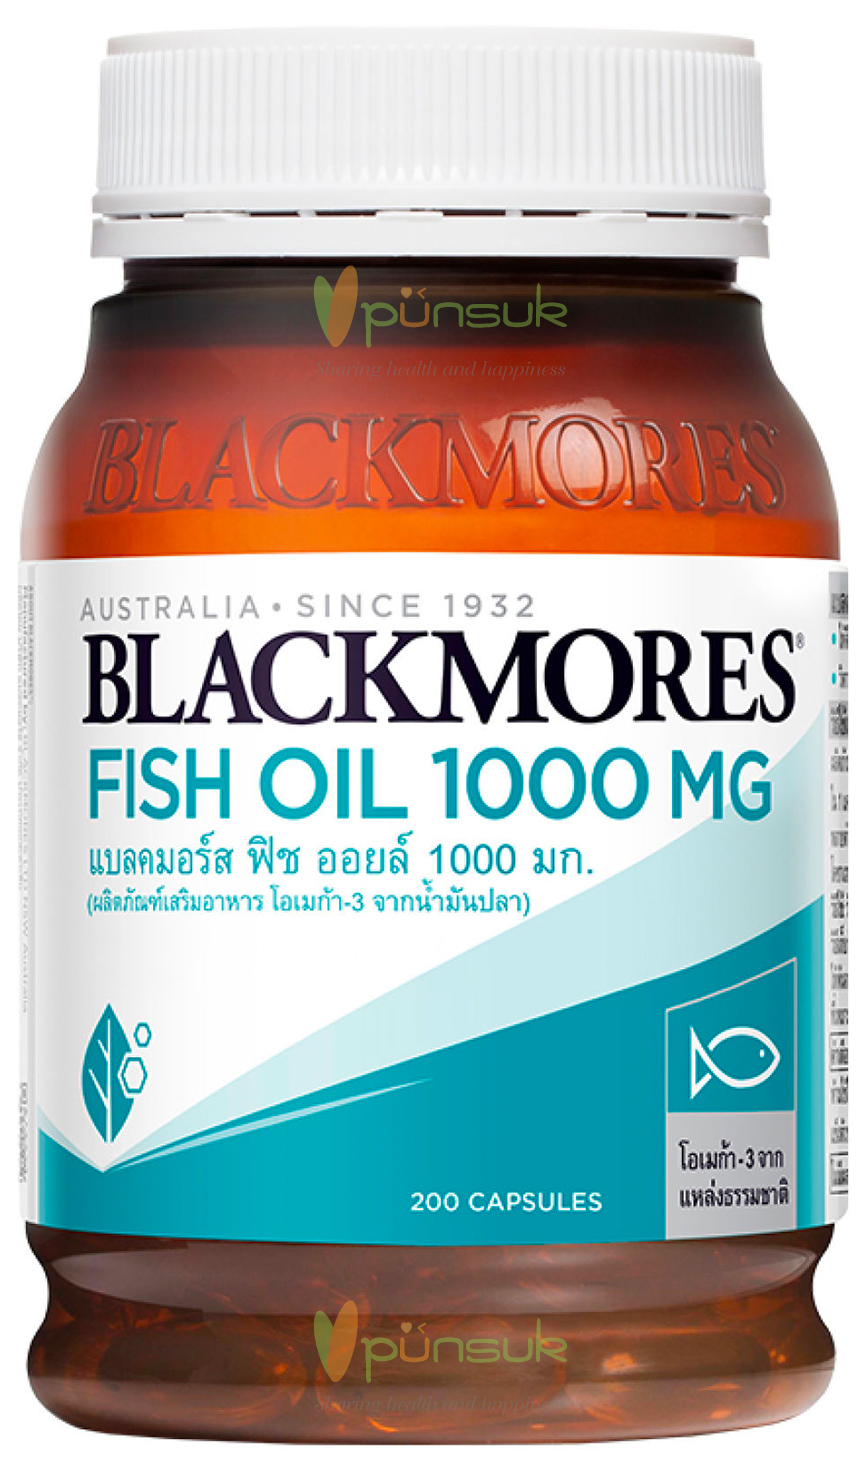 BLACKMORES FISH OIL 1000 (200 CAPSULES) แบลคมอร์ส ฟิช ออยล์ น้ำมันปลา 1000 (200 แคปซูล)